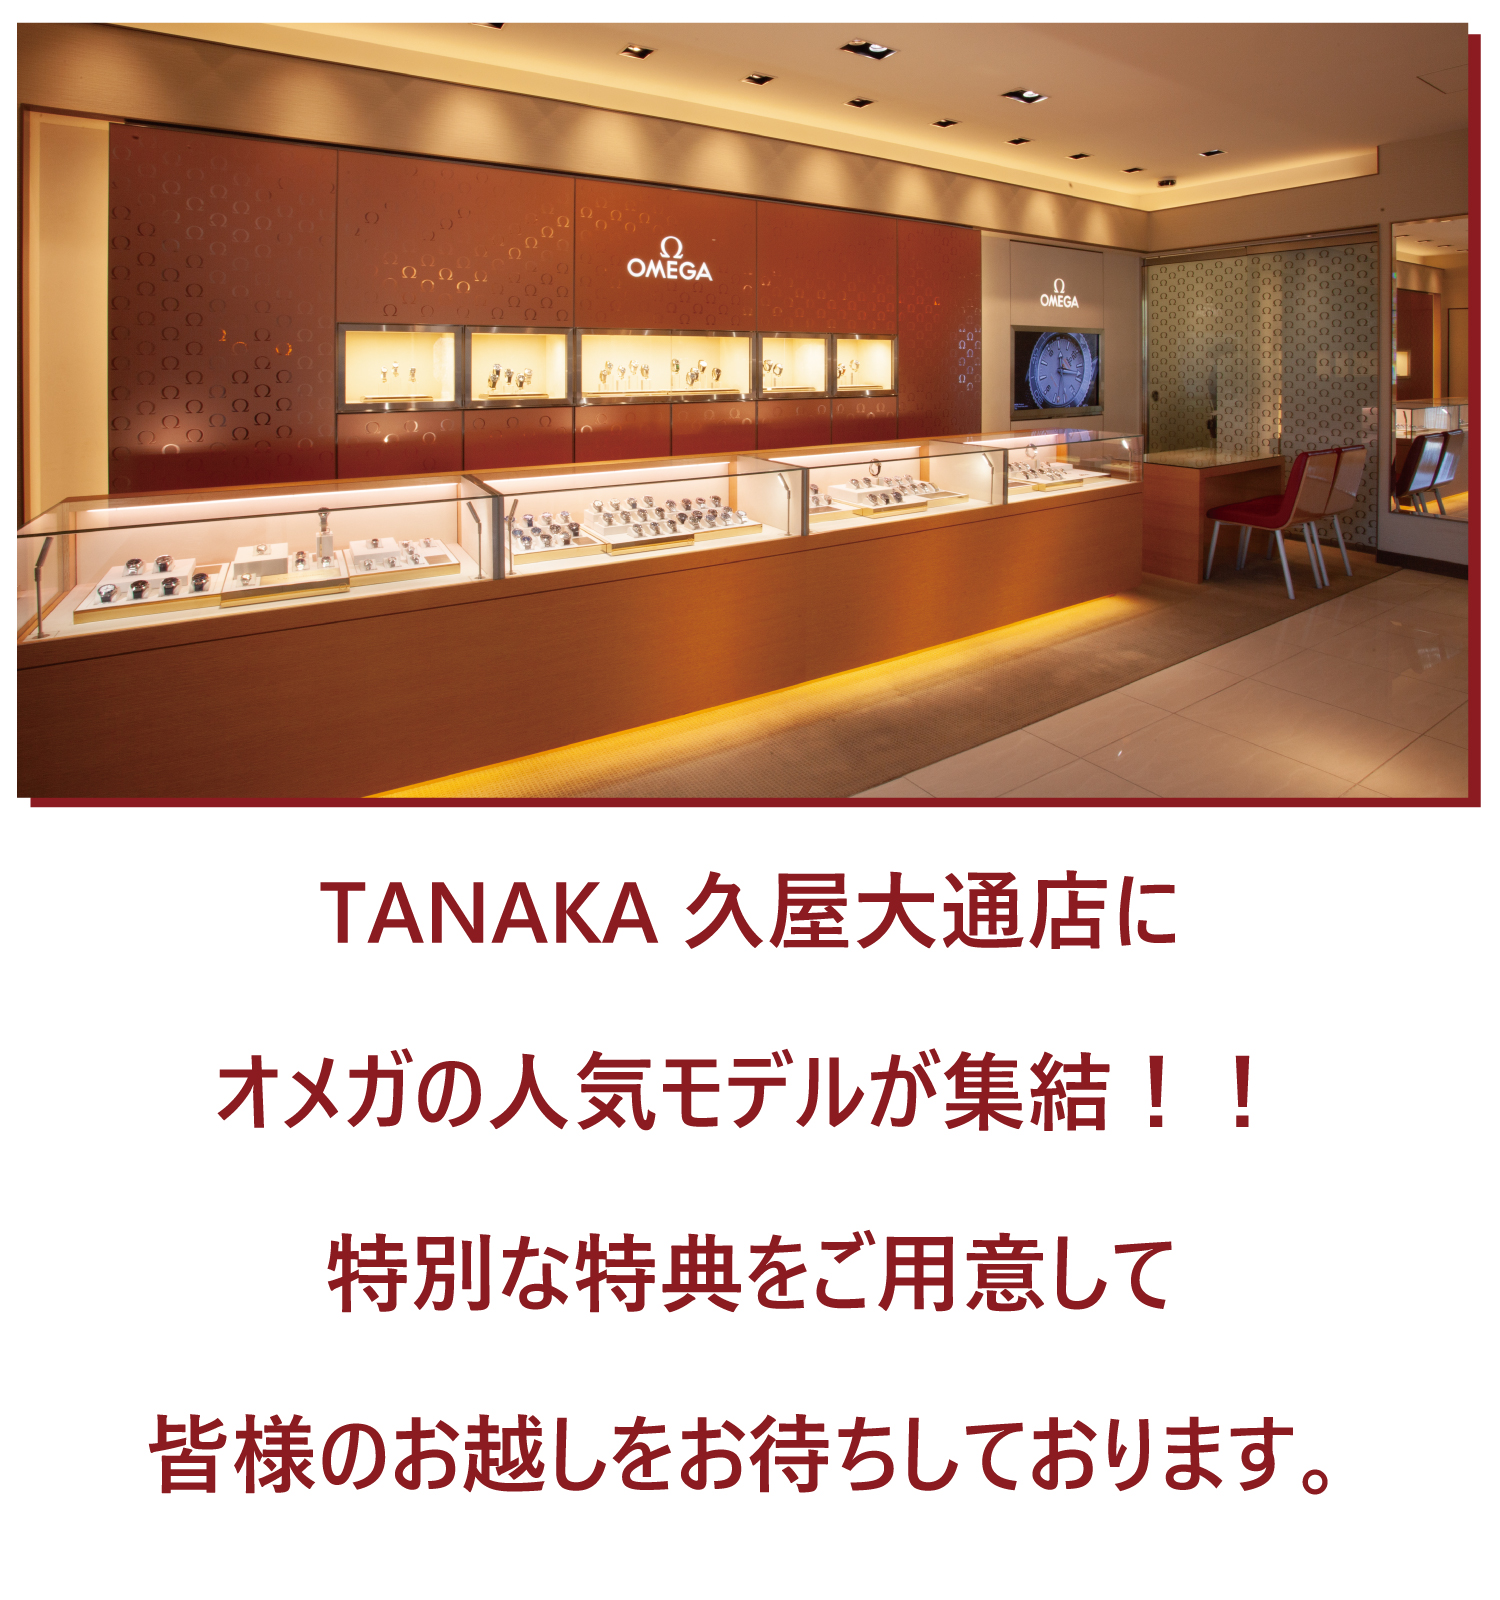 OMEGAフェア_TANAKA久屋大通店_特別な特典として120回無金利クレジットもご利用いただけます